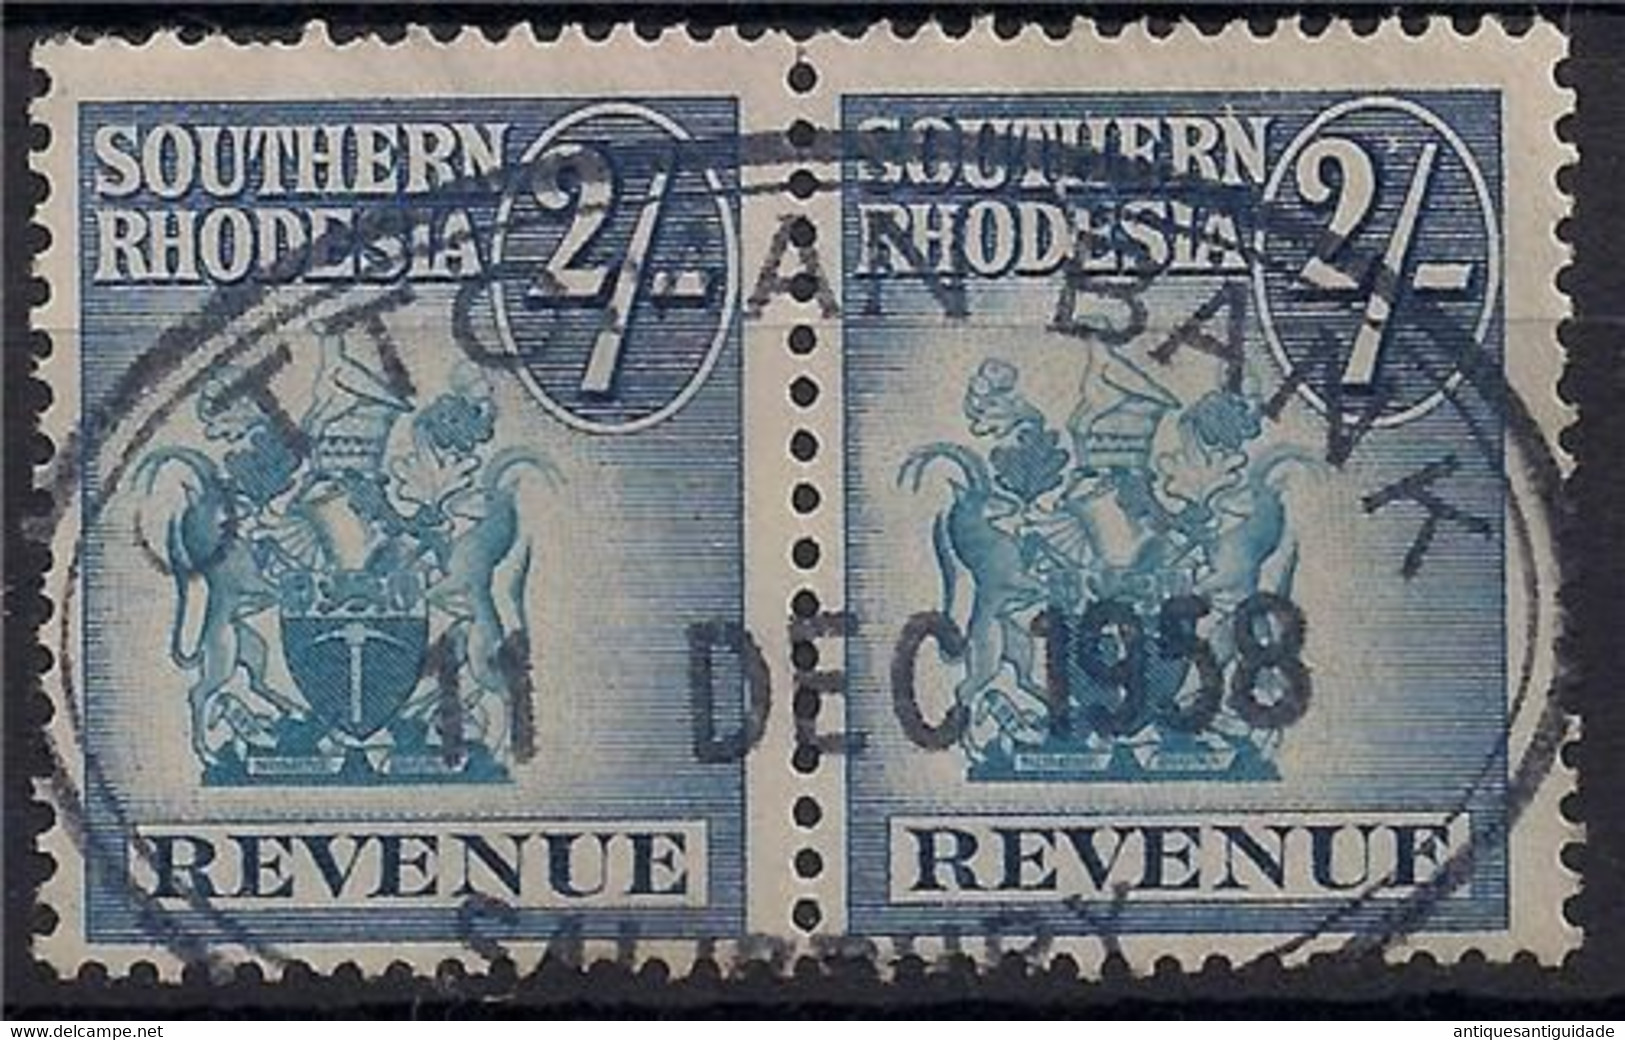 Southern Rhodesia Revenue Duty Stamp 2/ 11-12-1958 OVAL "OTTOMAN BANK" CANCEL - Rhodesië & Nyasaland (1954-1963)